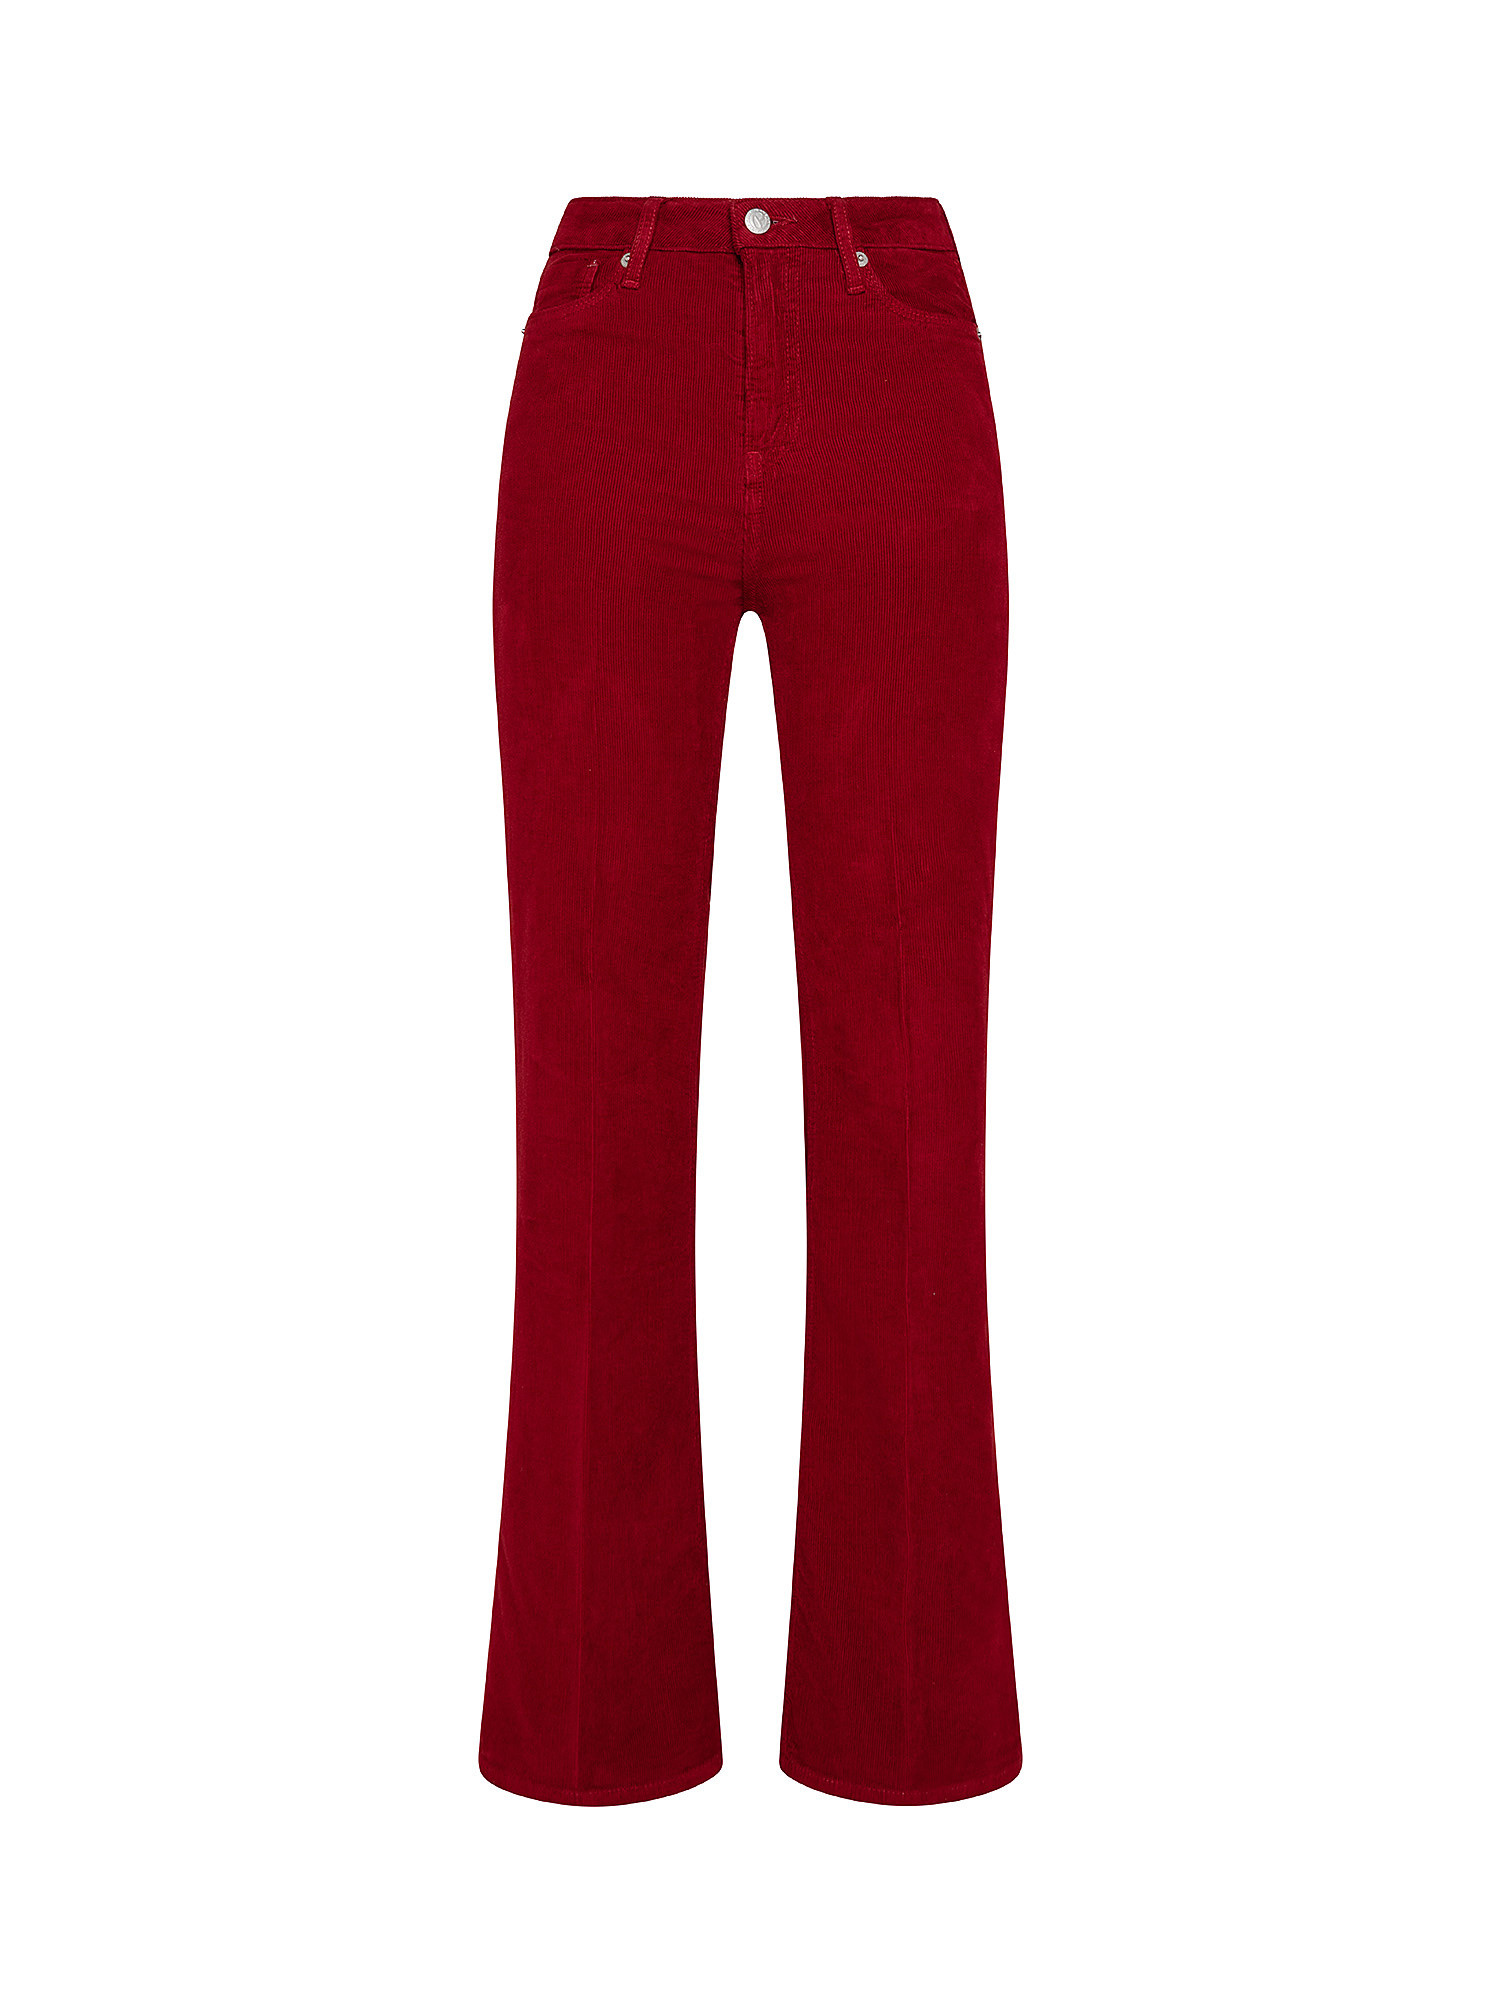 Pantaloni Willa, Rosso mattone, large image number 0